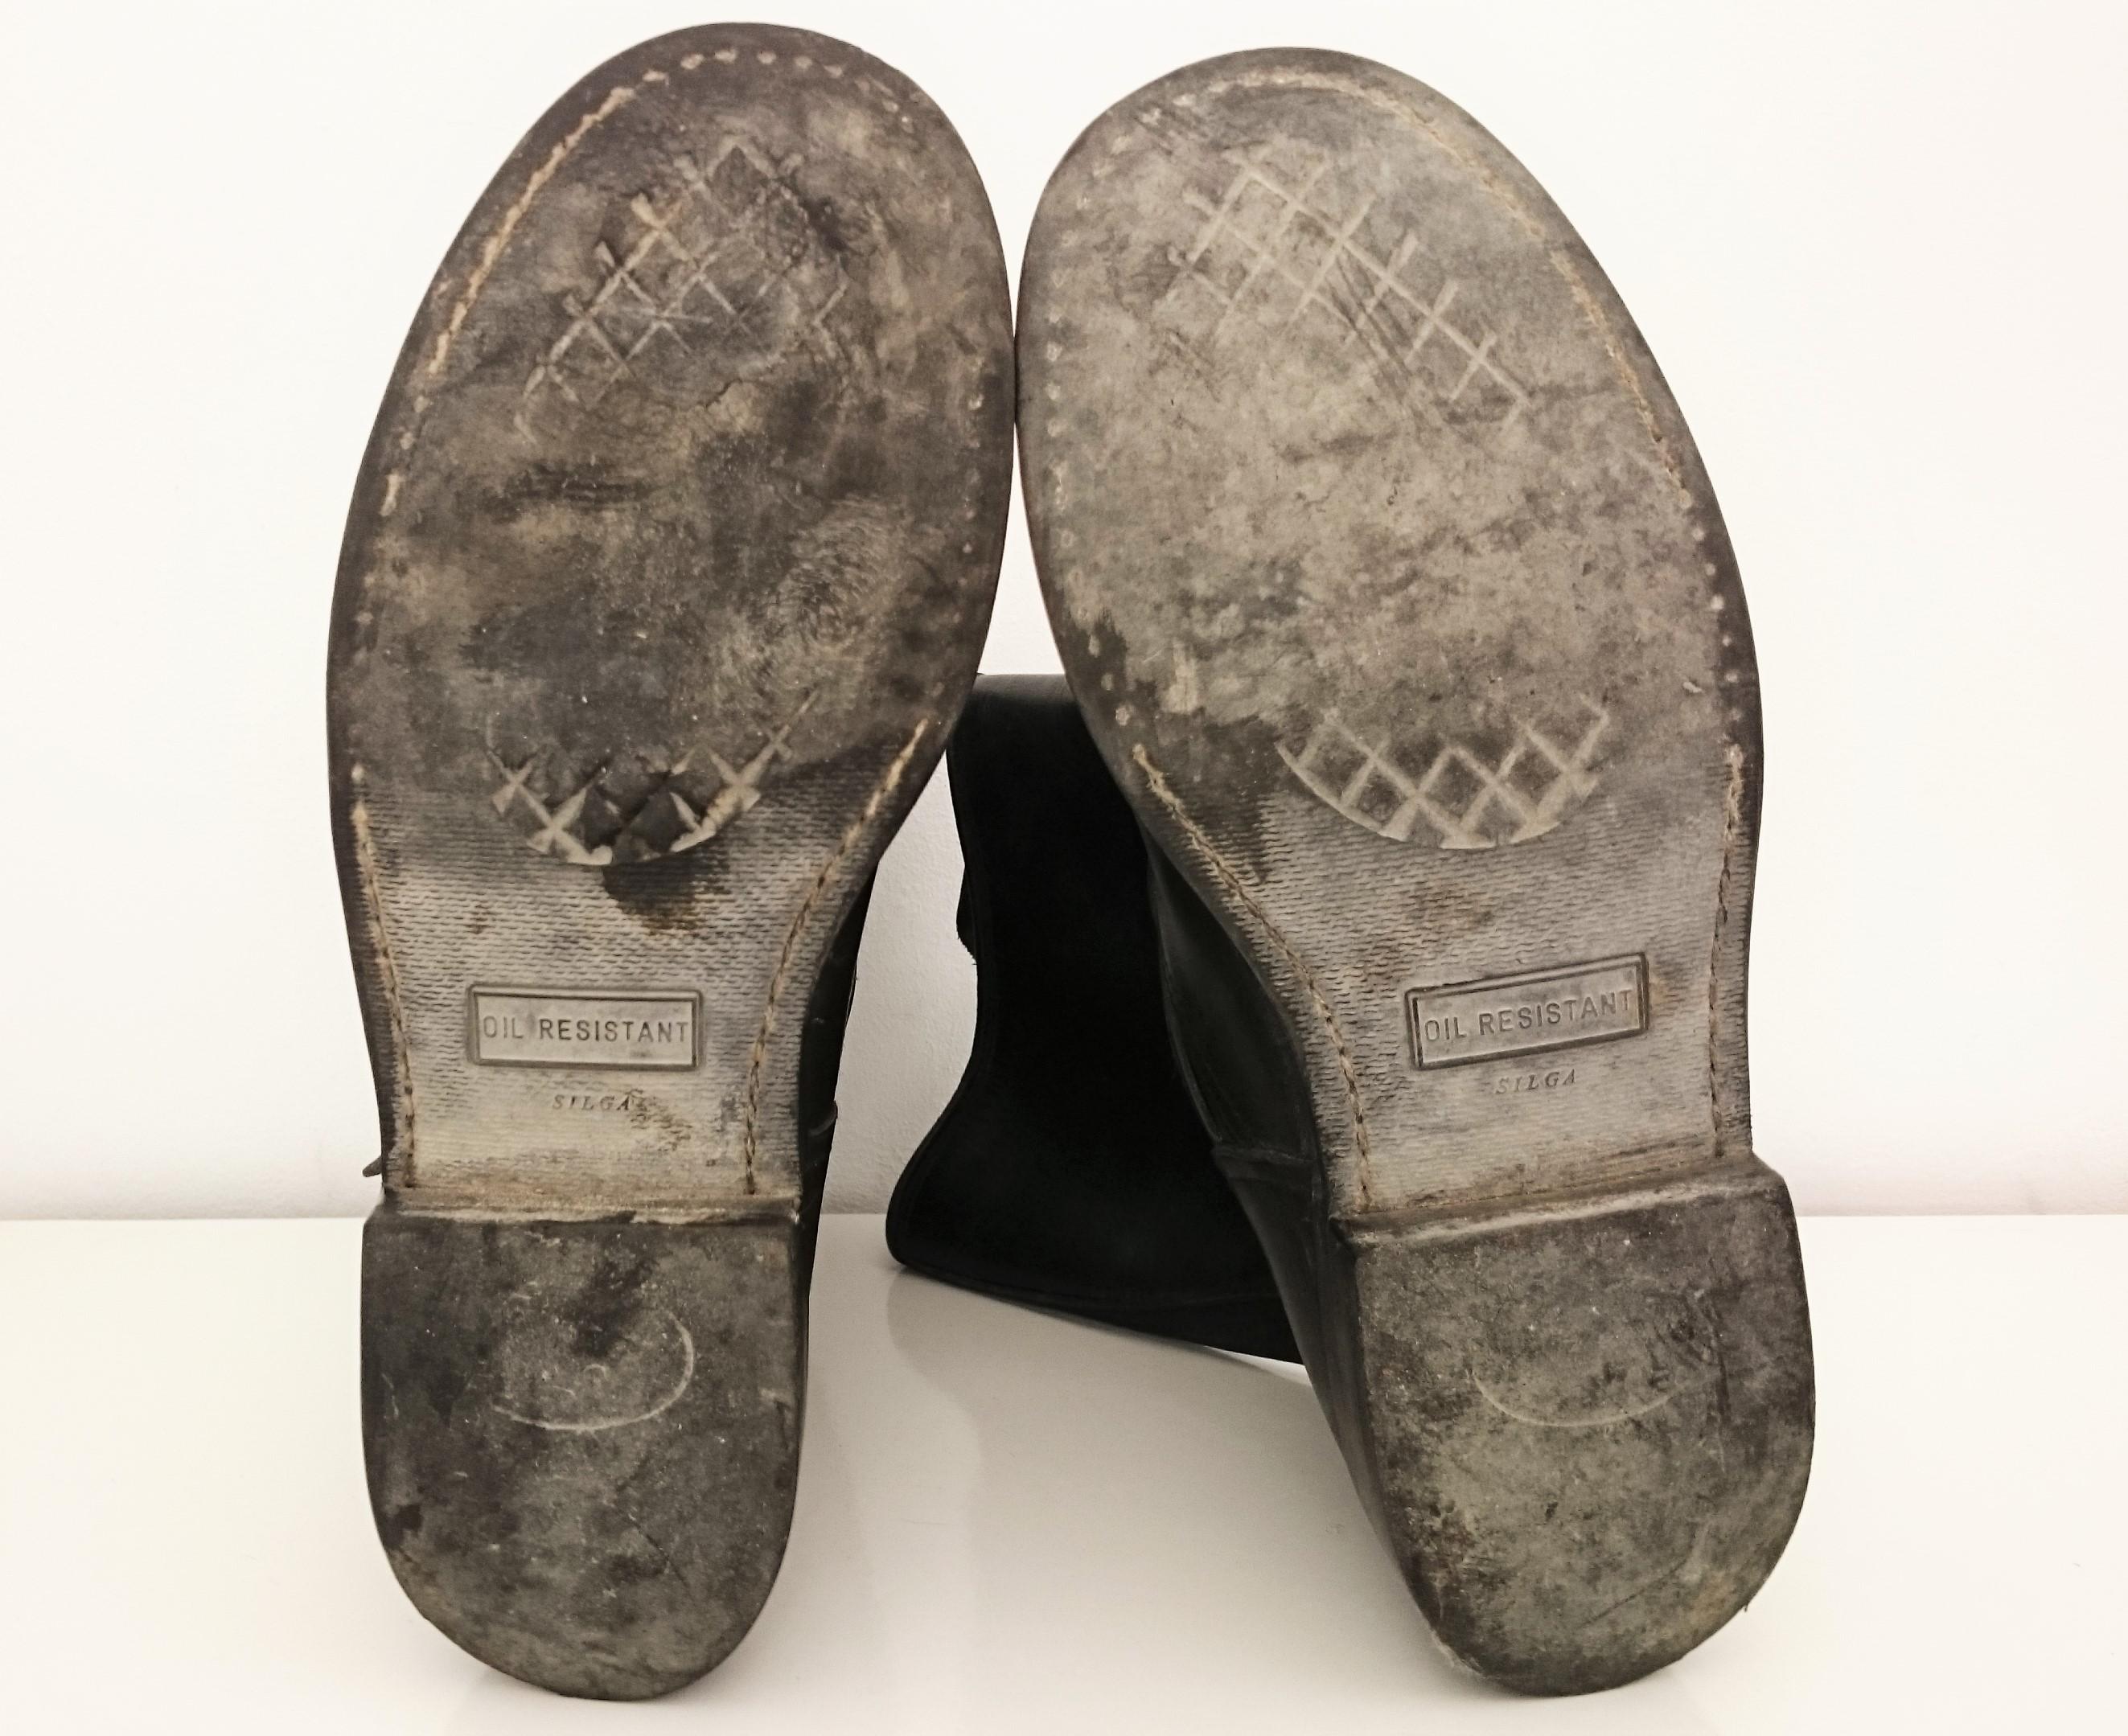 HARLEY DAVIDSON Black Leather Boots. Size 8 (UK) 3